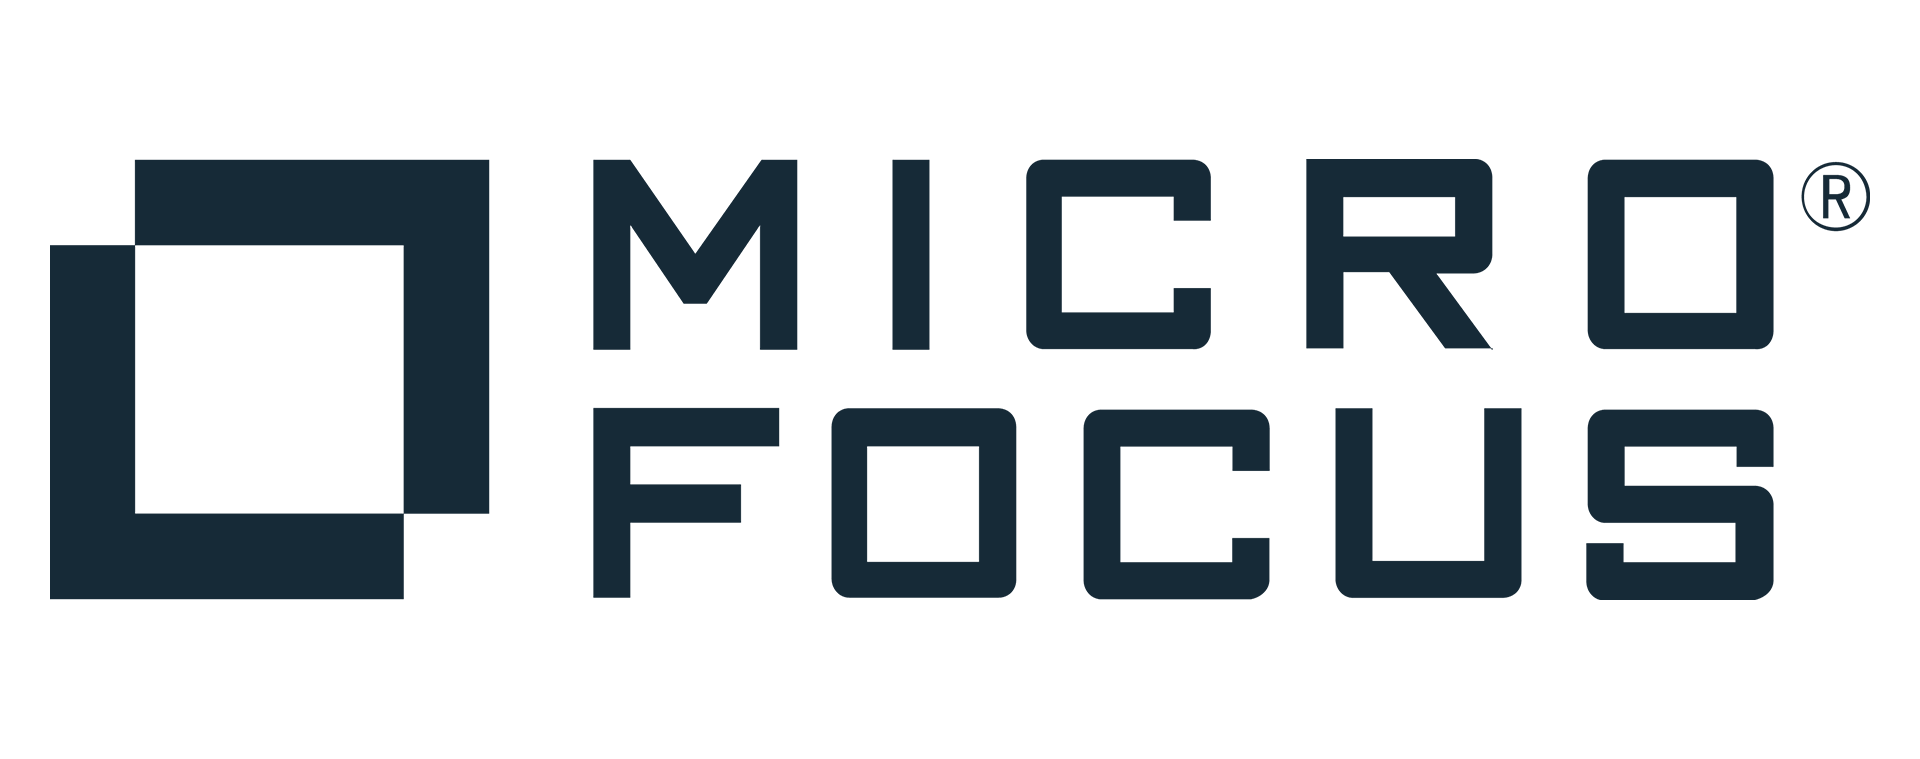 micro focus resize